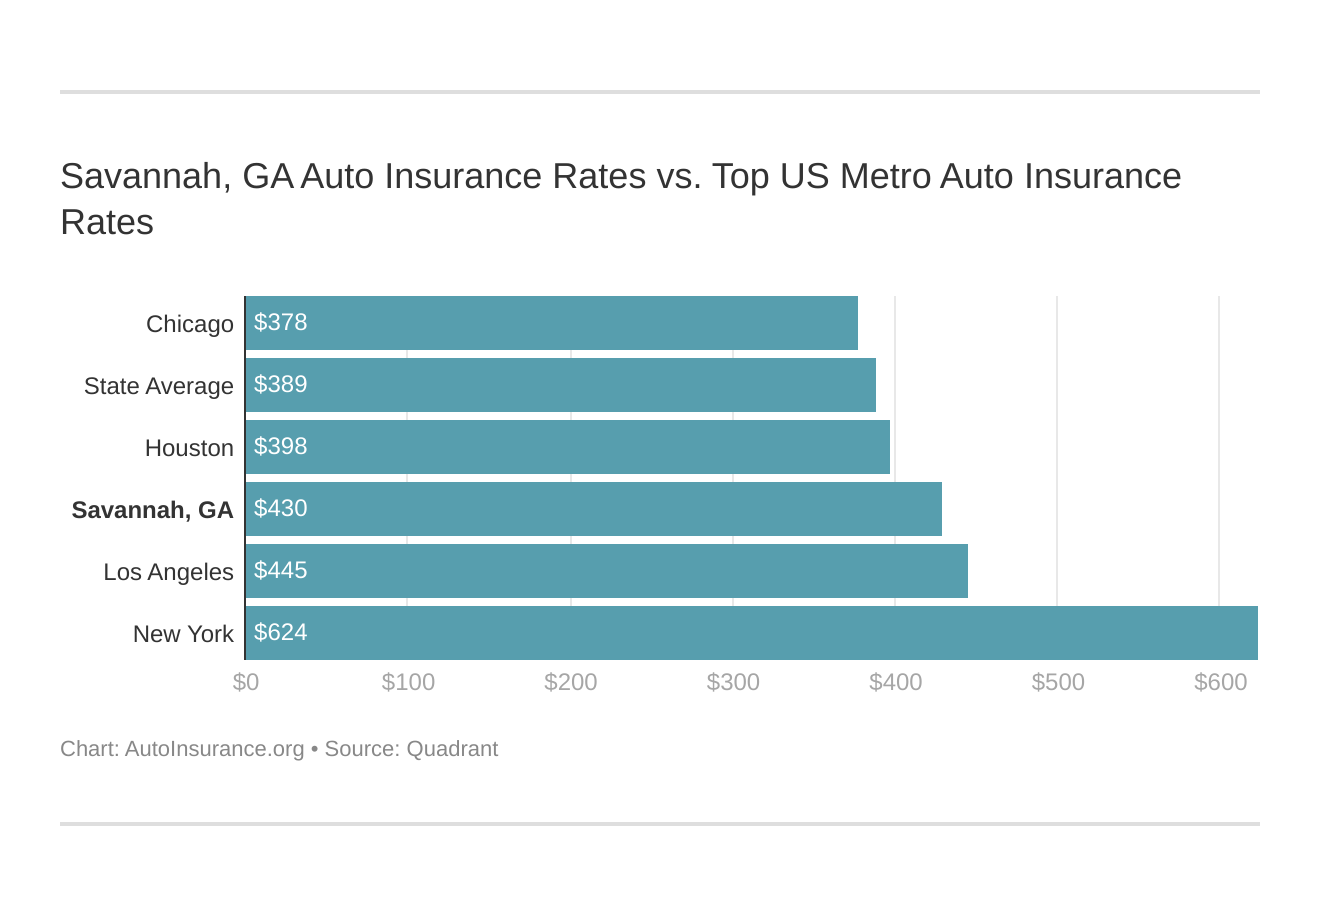 Savannah, GA Auto Insurance Rates vs. Top US Metro Auto Insurance Rates